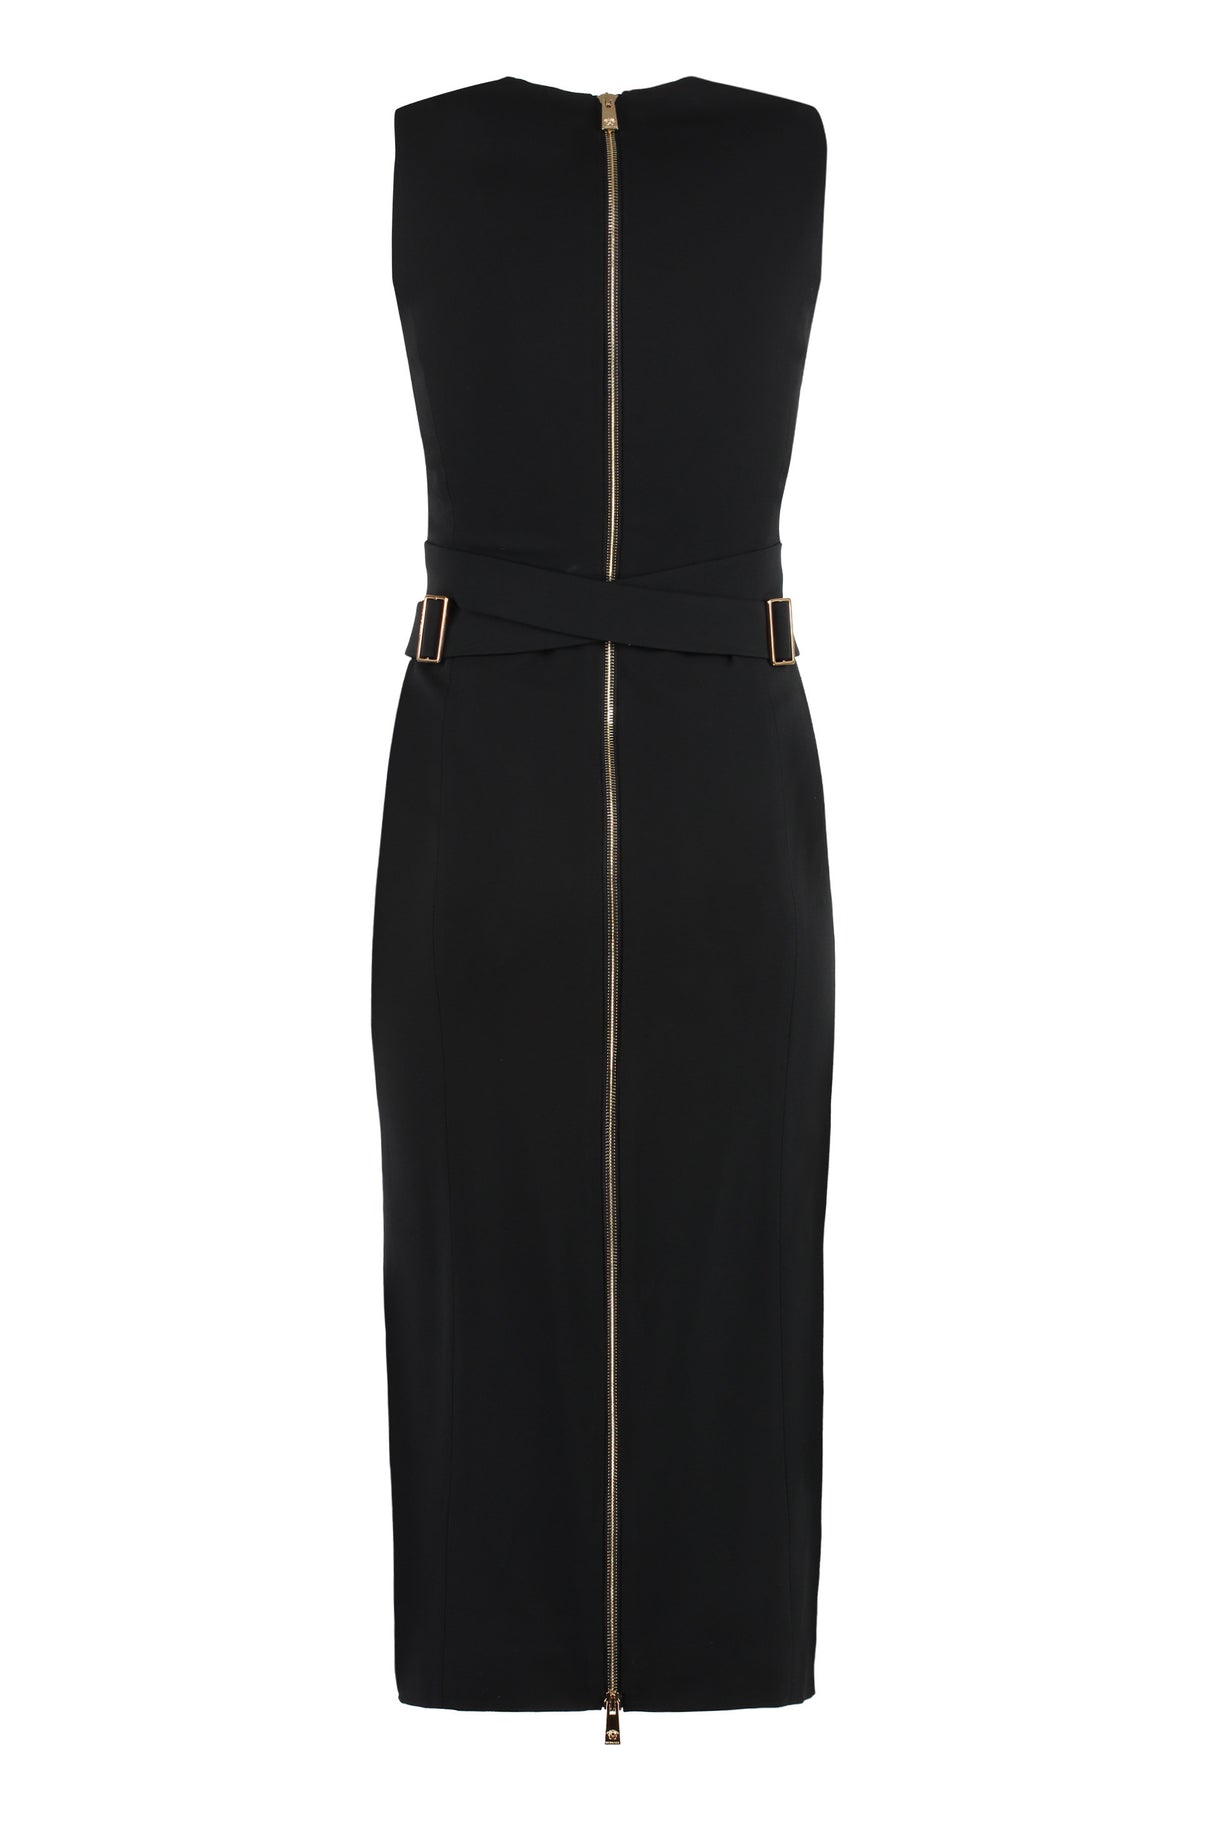 VERSACE Black Crepe Midi Dress with Medusa Detail at Front and Adjustable Waist Belt